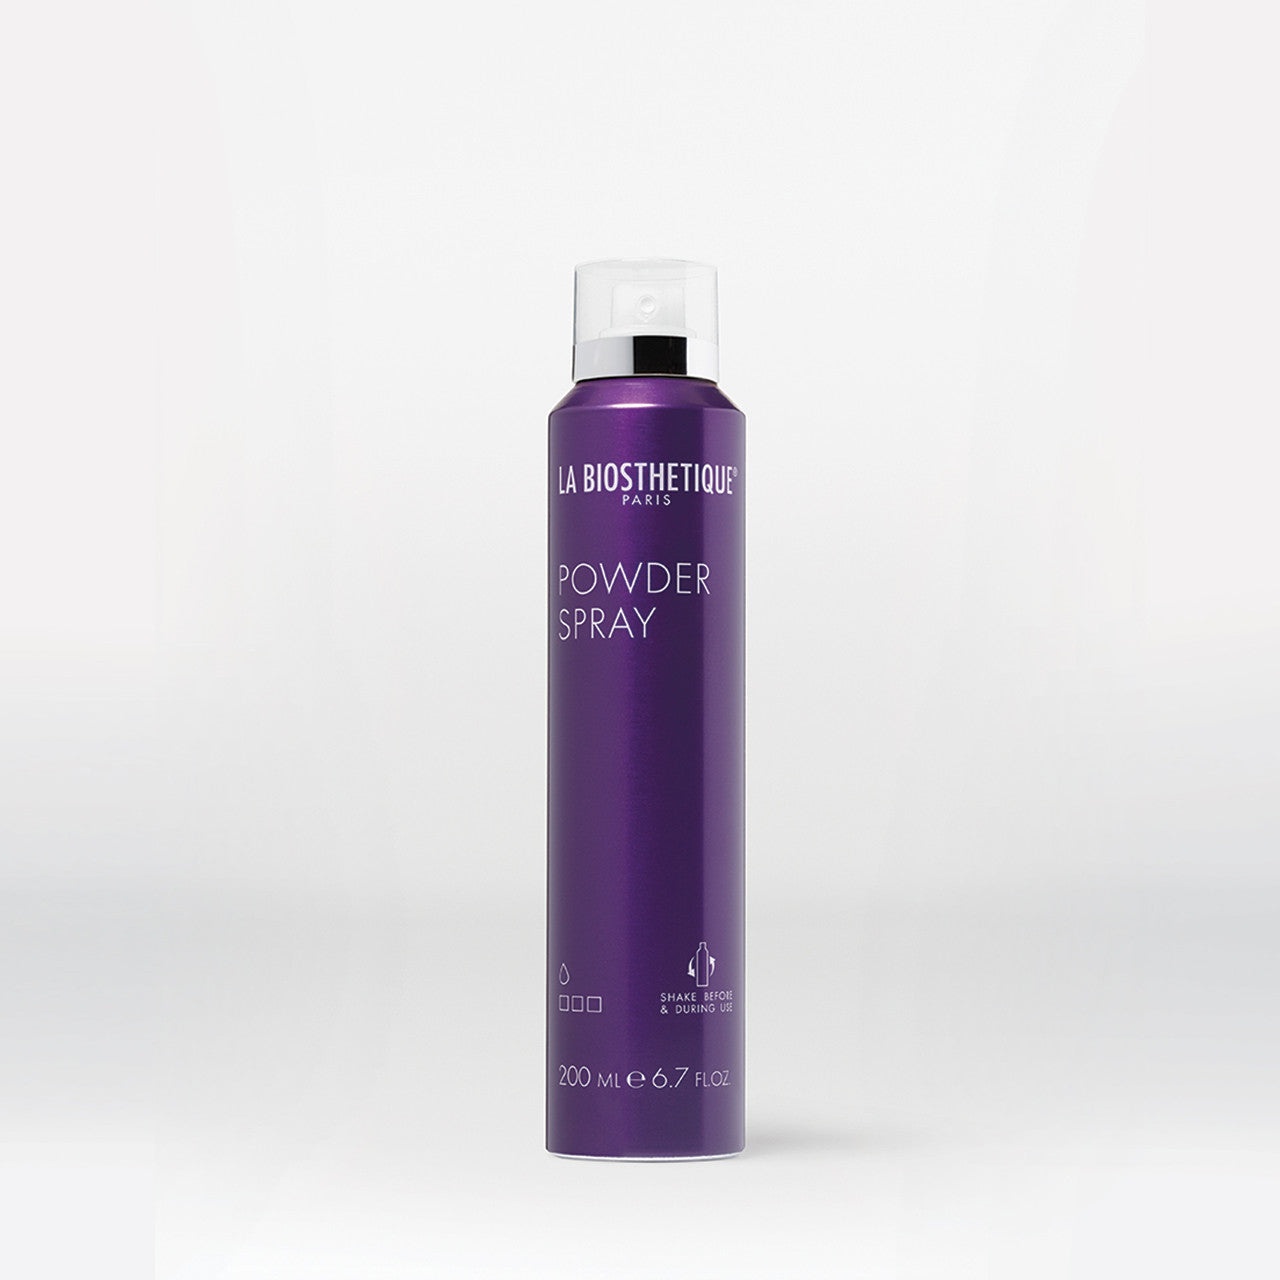 La Biosthetique's Powder Spray 200ml matte spray for more texture and volume